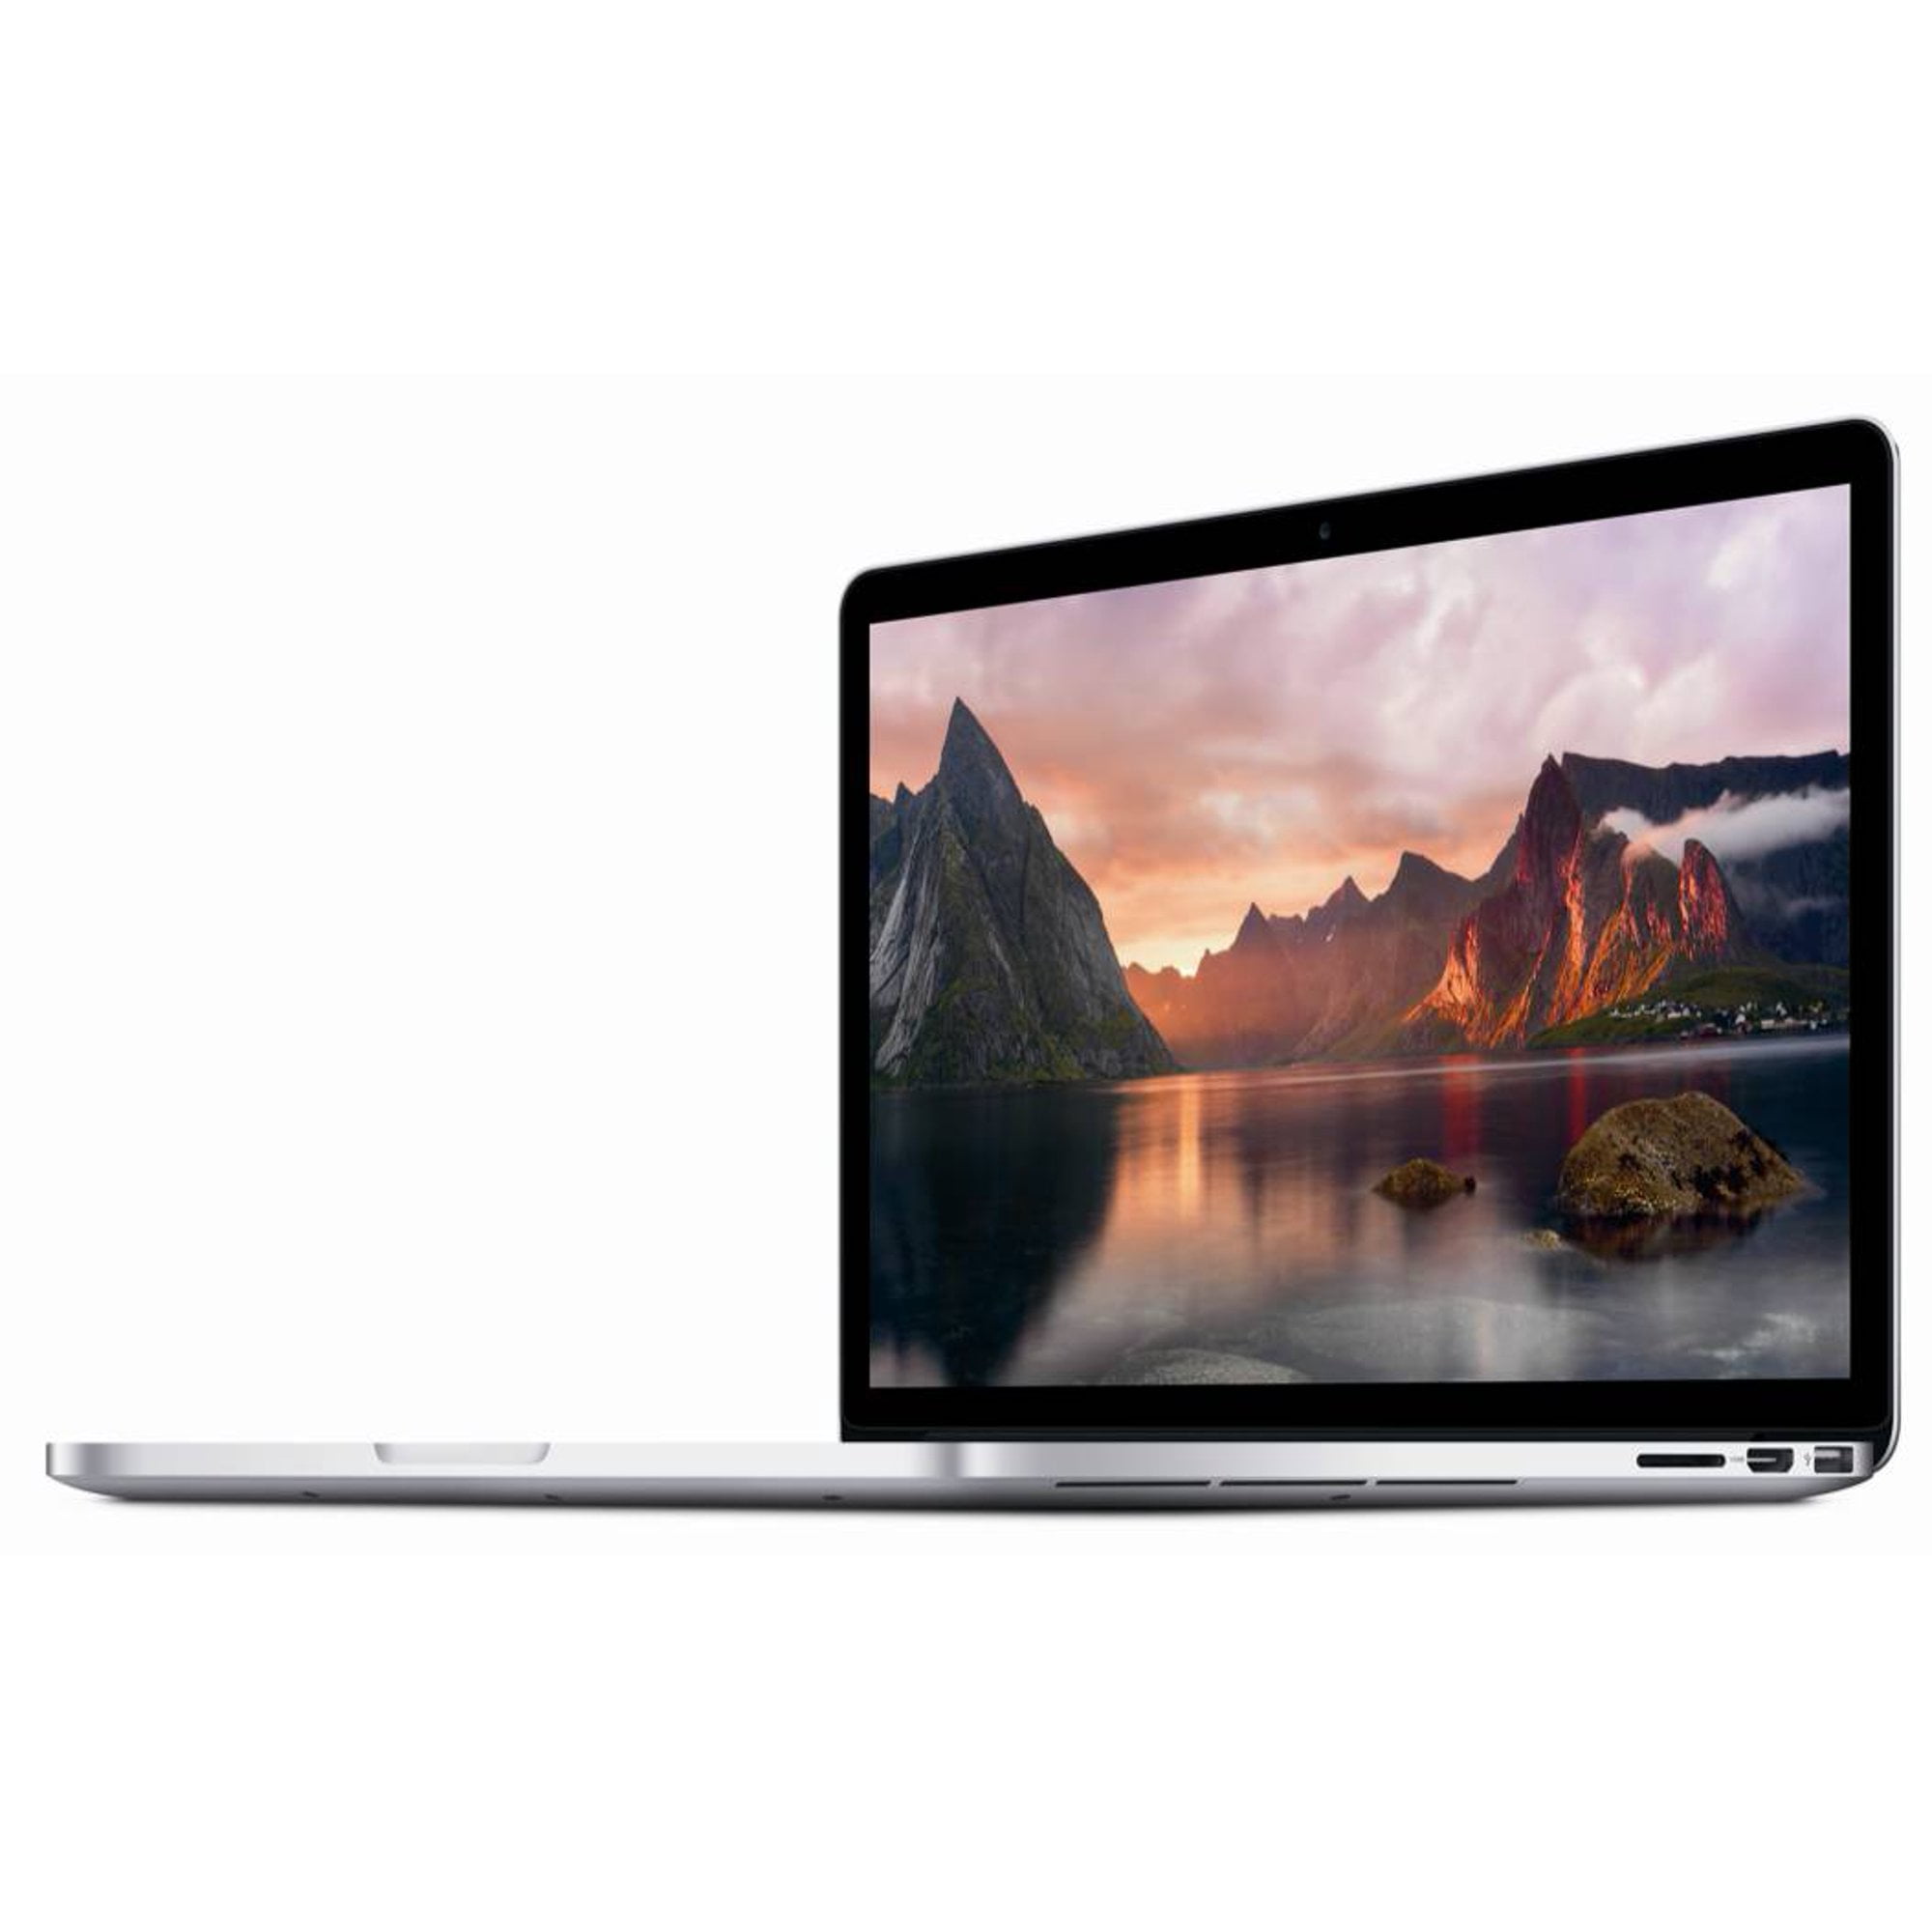 Apple Certified Used A Grade Macbook Pro 13.3-inch Laptop (Retina